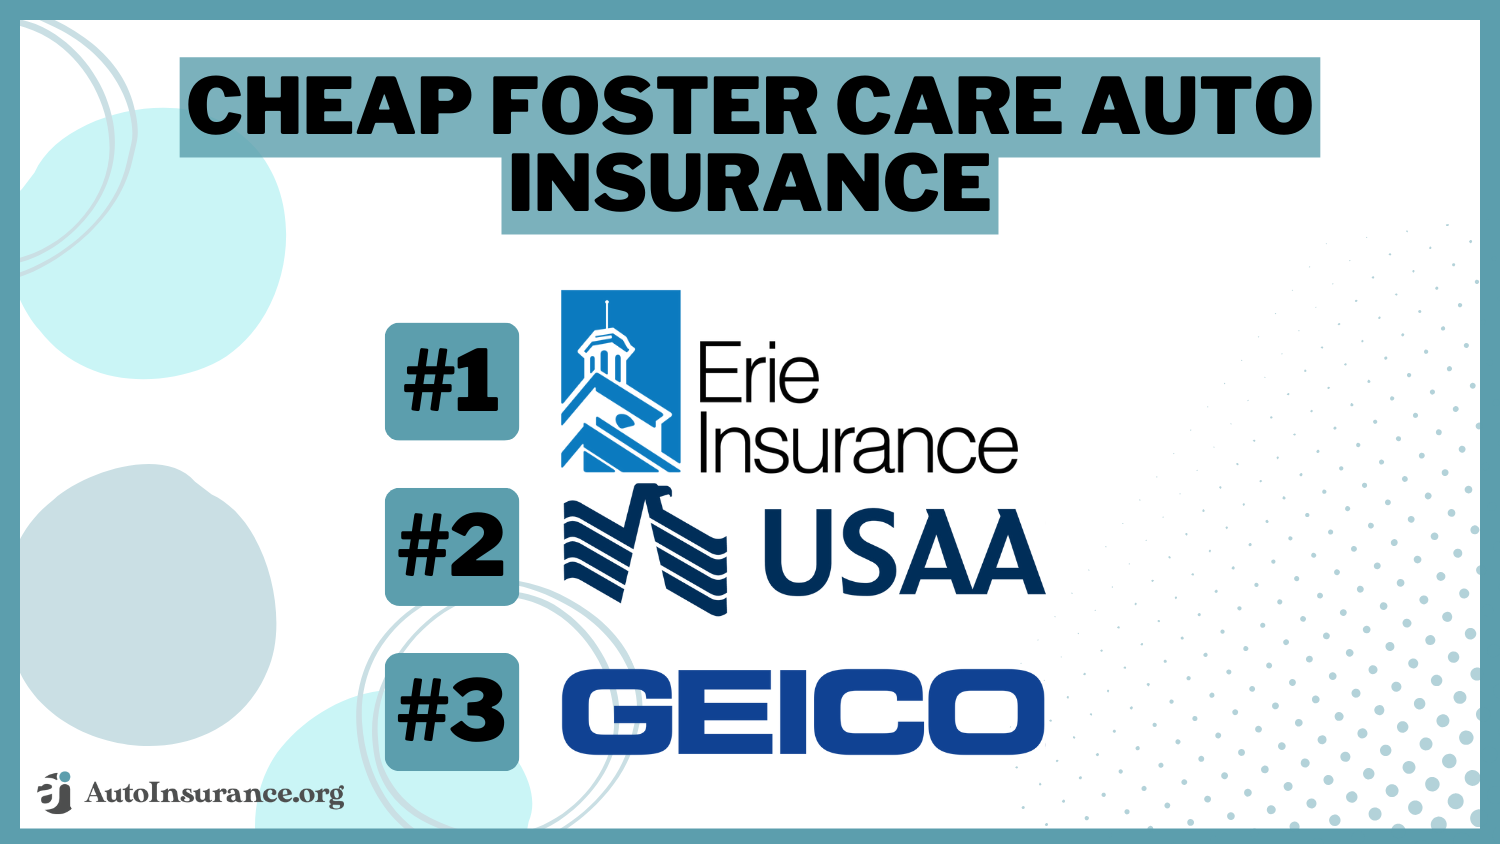 Erie, USAA, Geico: cheap foster care auto insurance